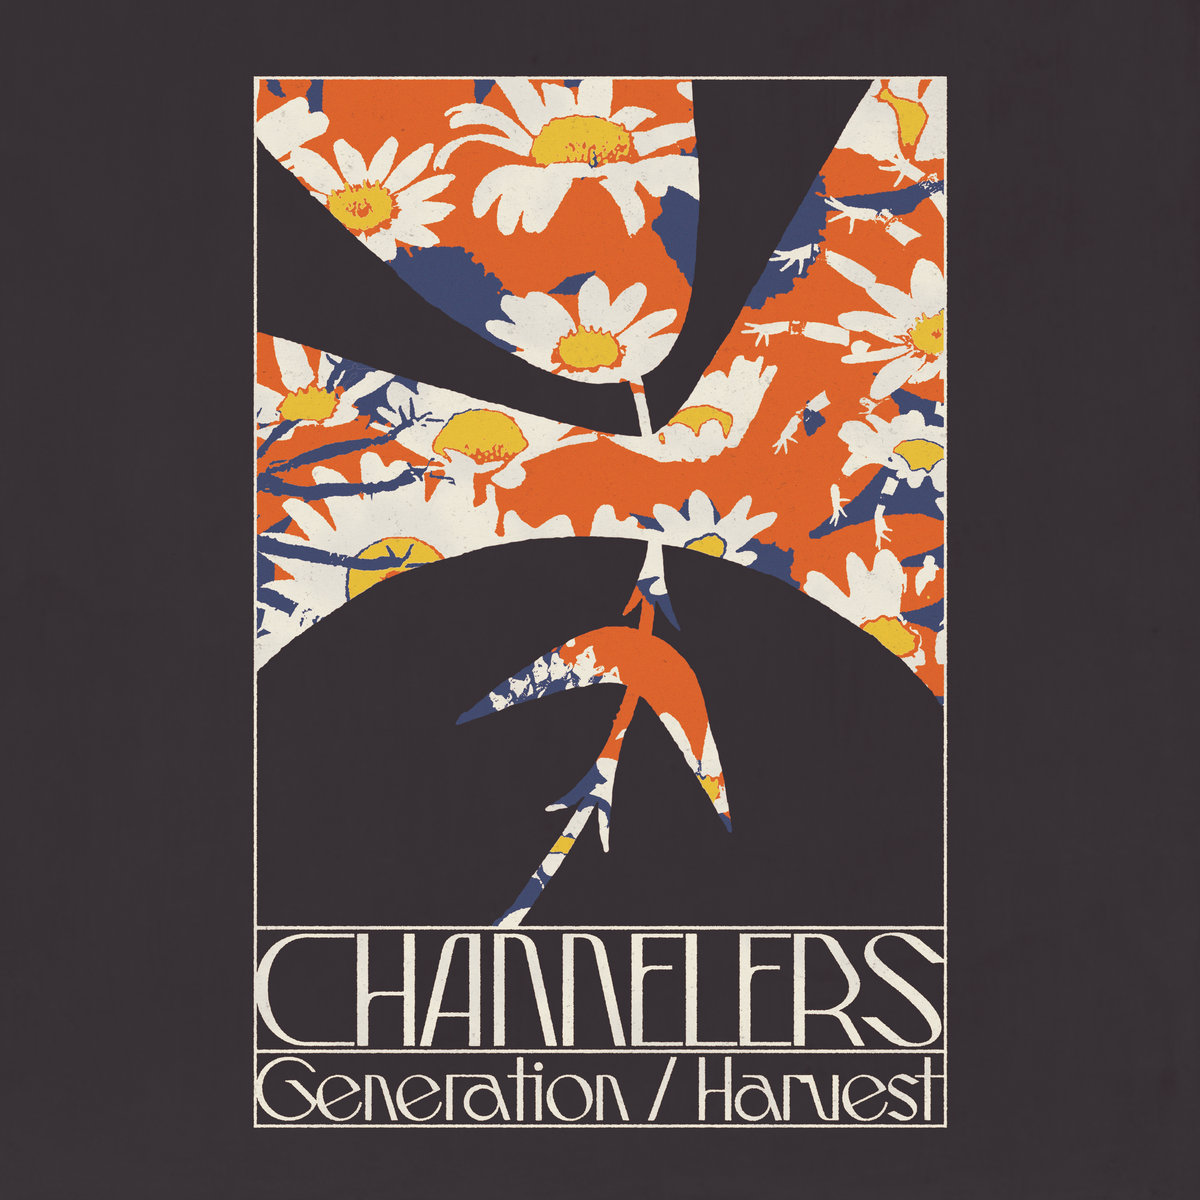 Channelers - Generation / Harvest